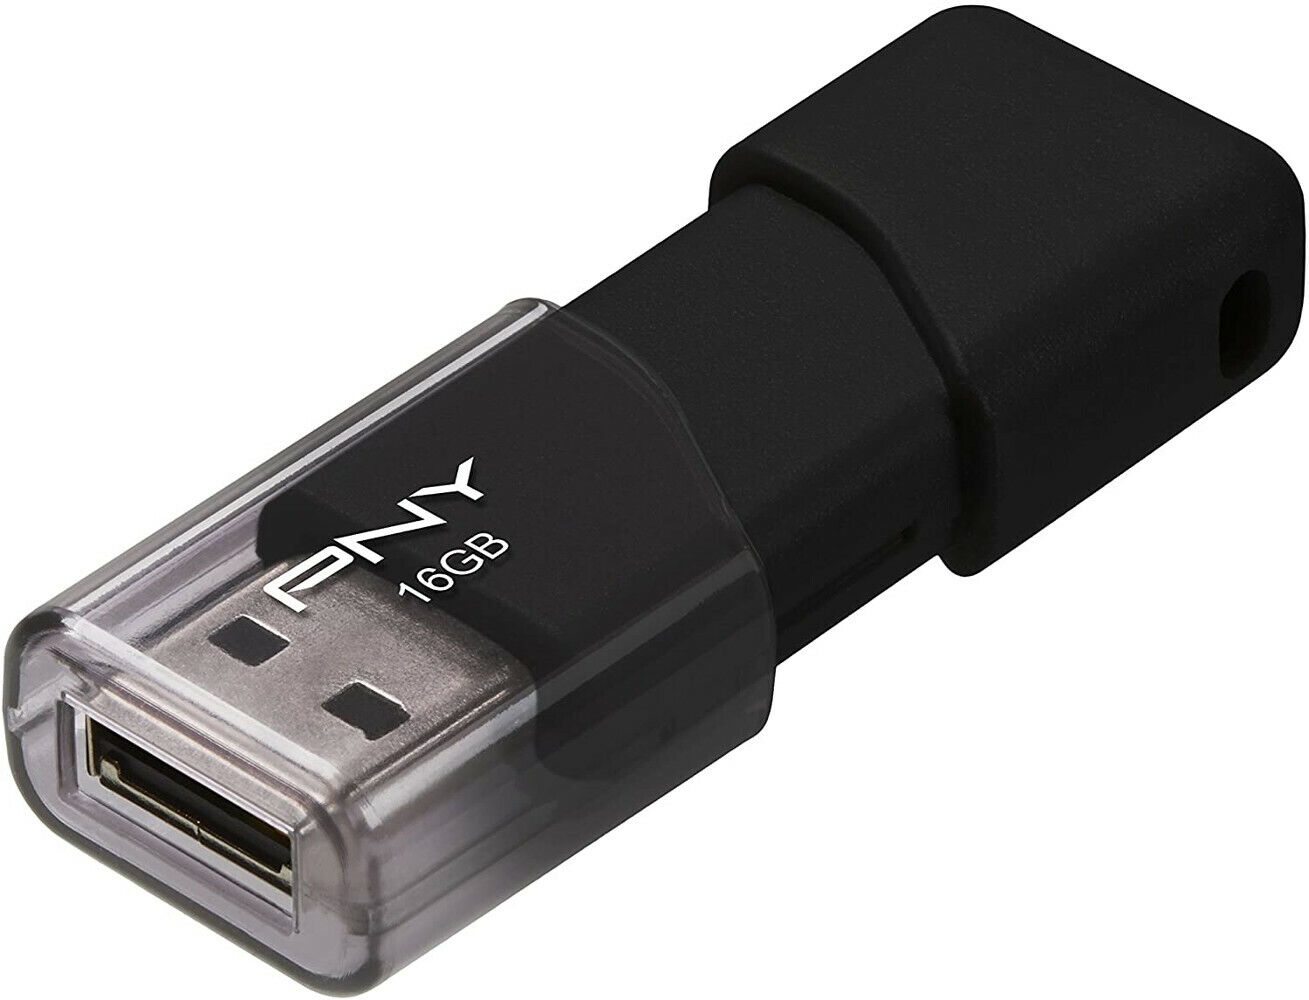 Knoppix 9.1 Desktop DVD Live Portable USB Flash Thumb Drive GNU Linux OS 32 Bit